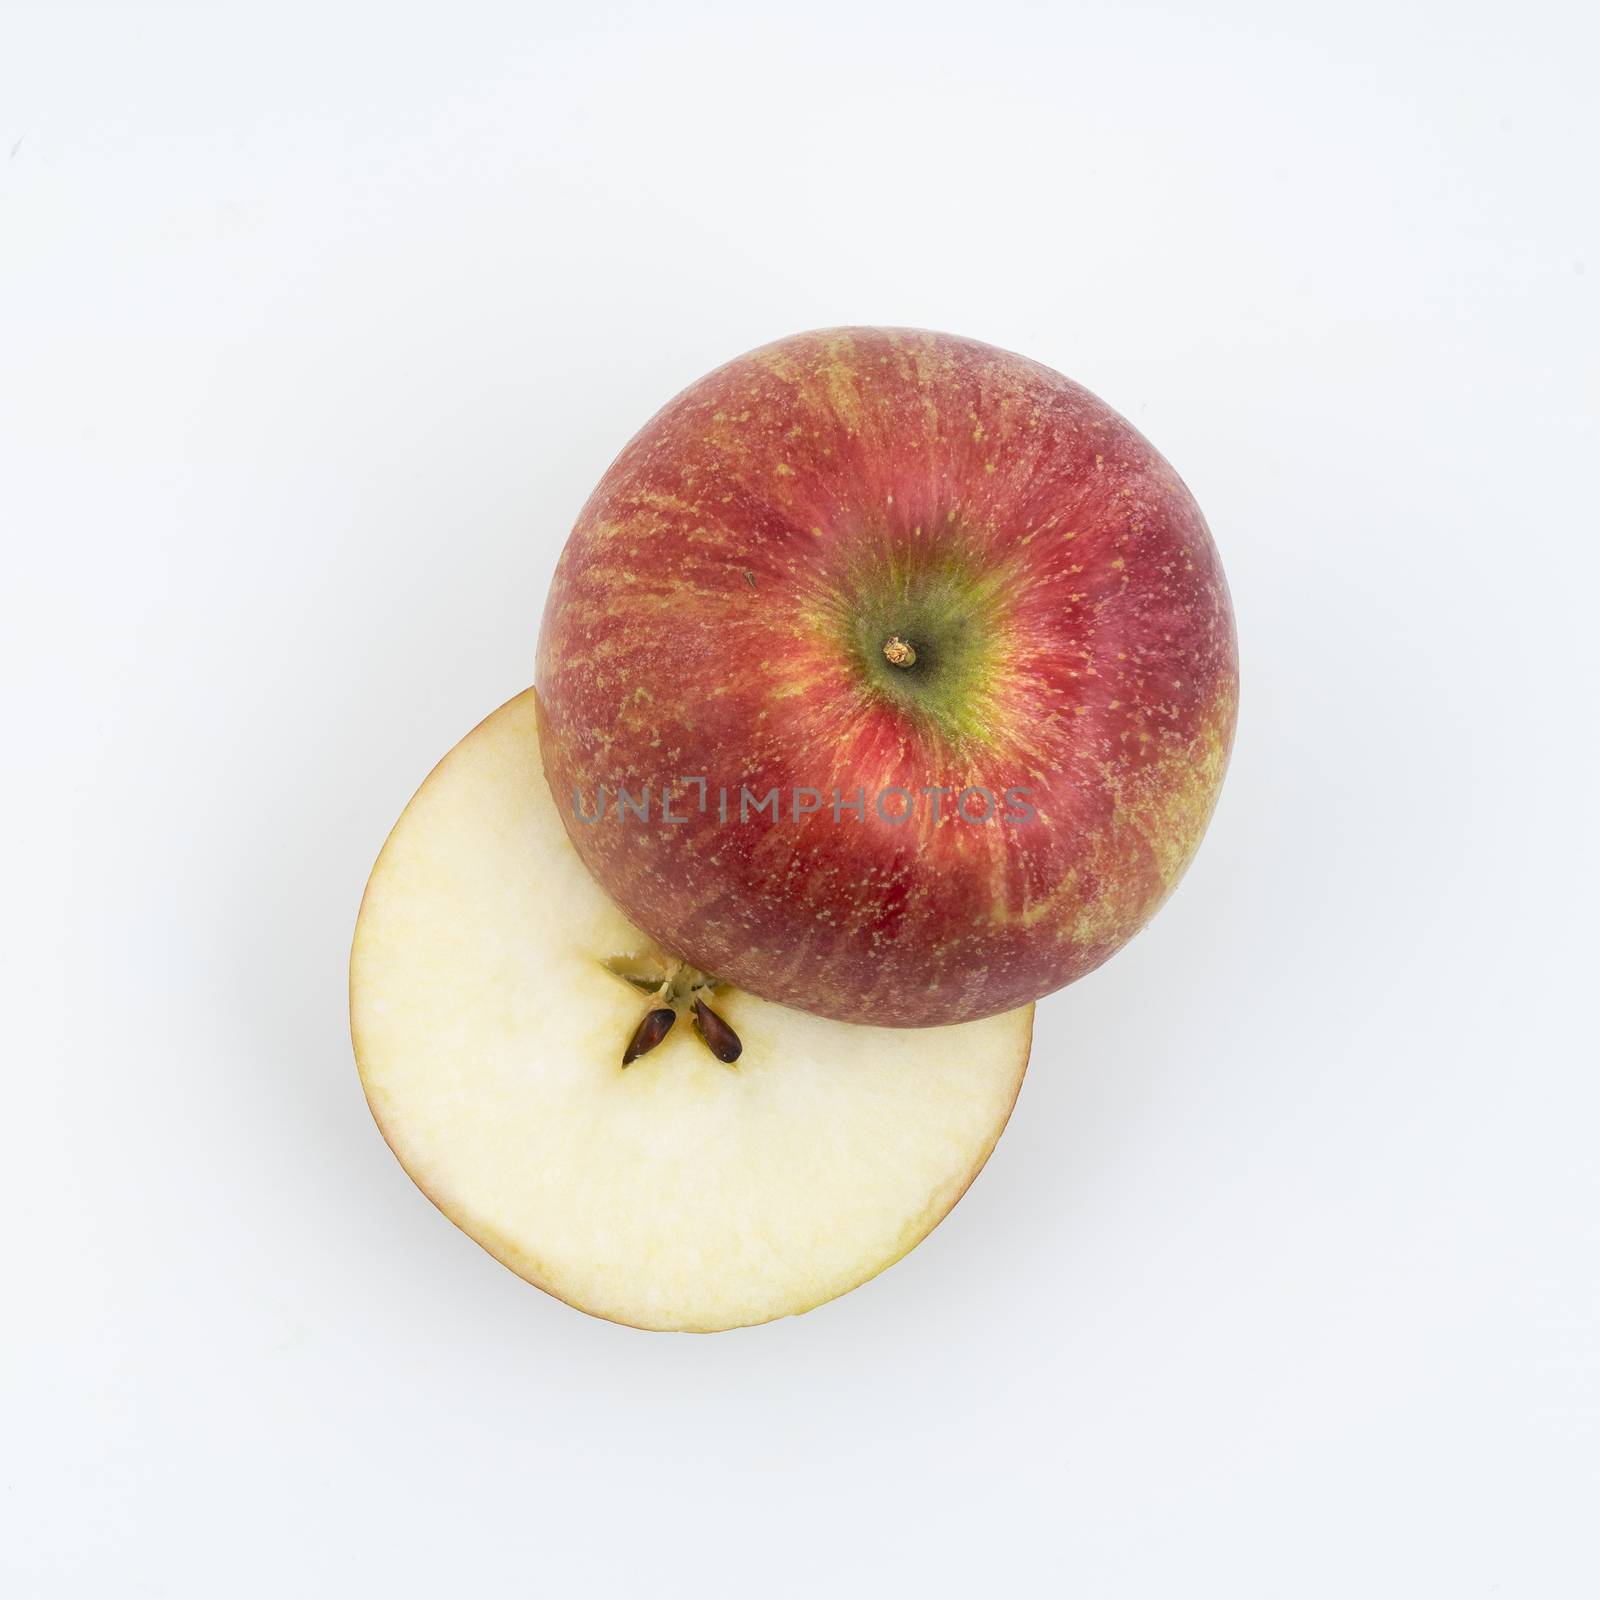 an apple cut on a white surface